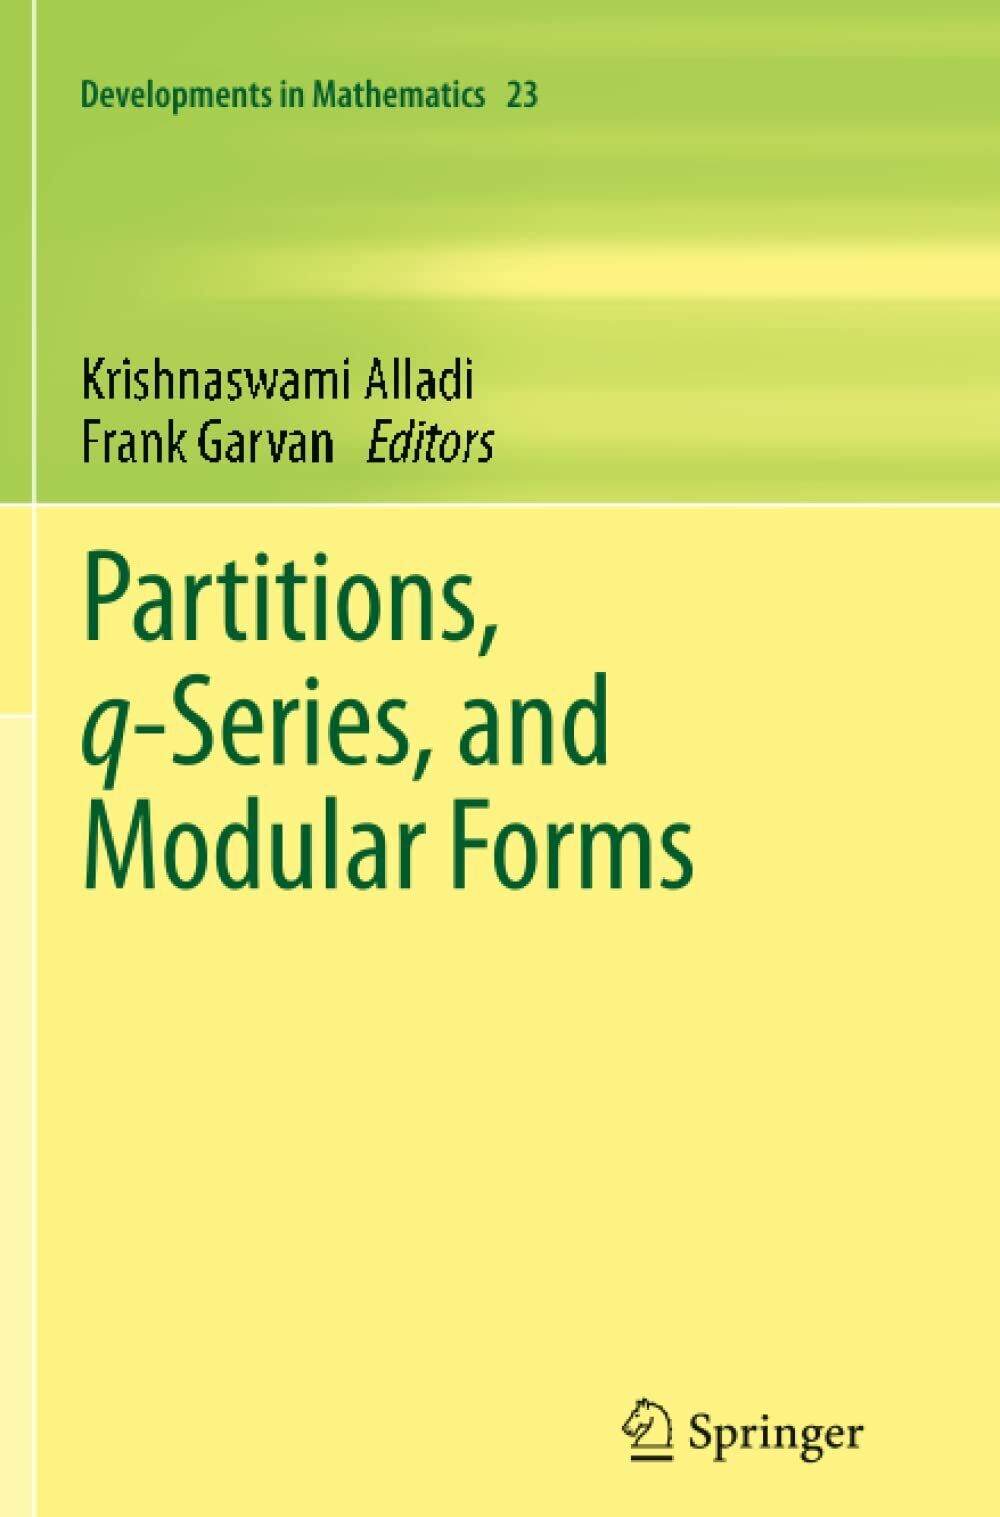 Partitions, q-Series, and Modular Forms - Krishnaswami Alladi - Springer, 2014